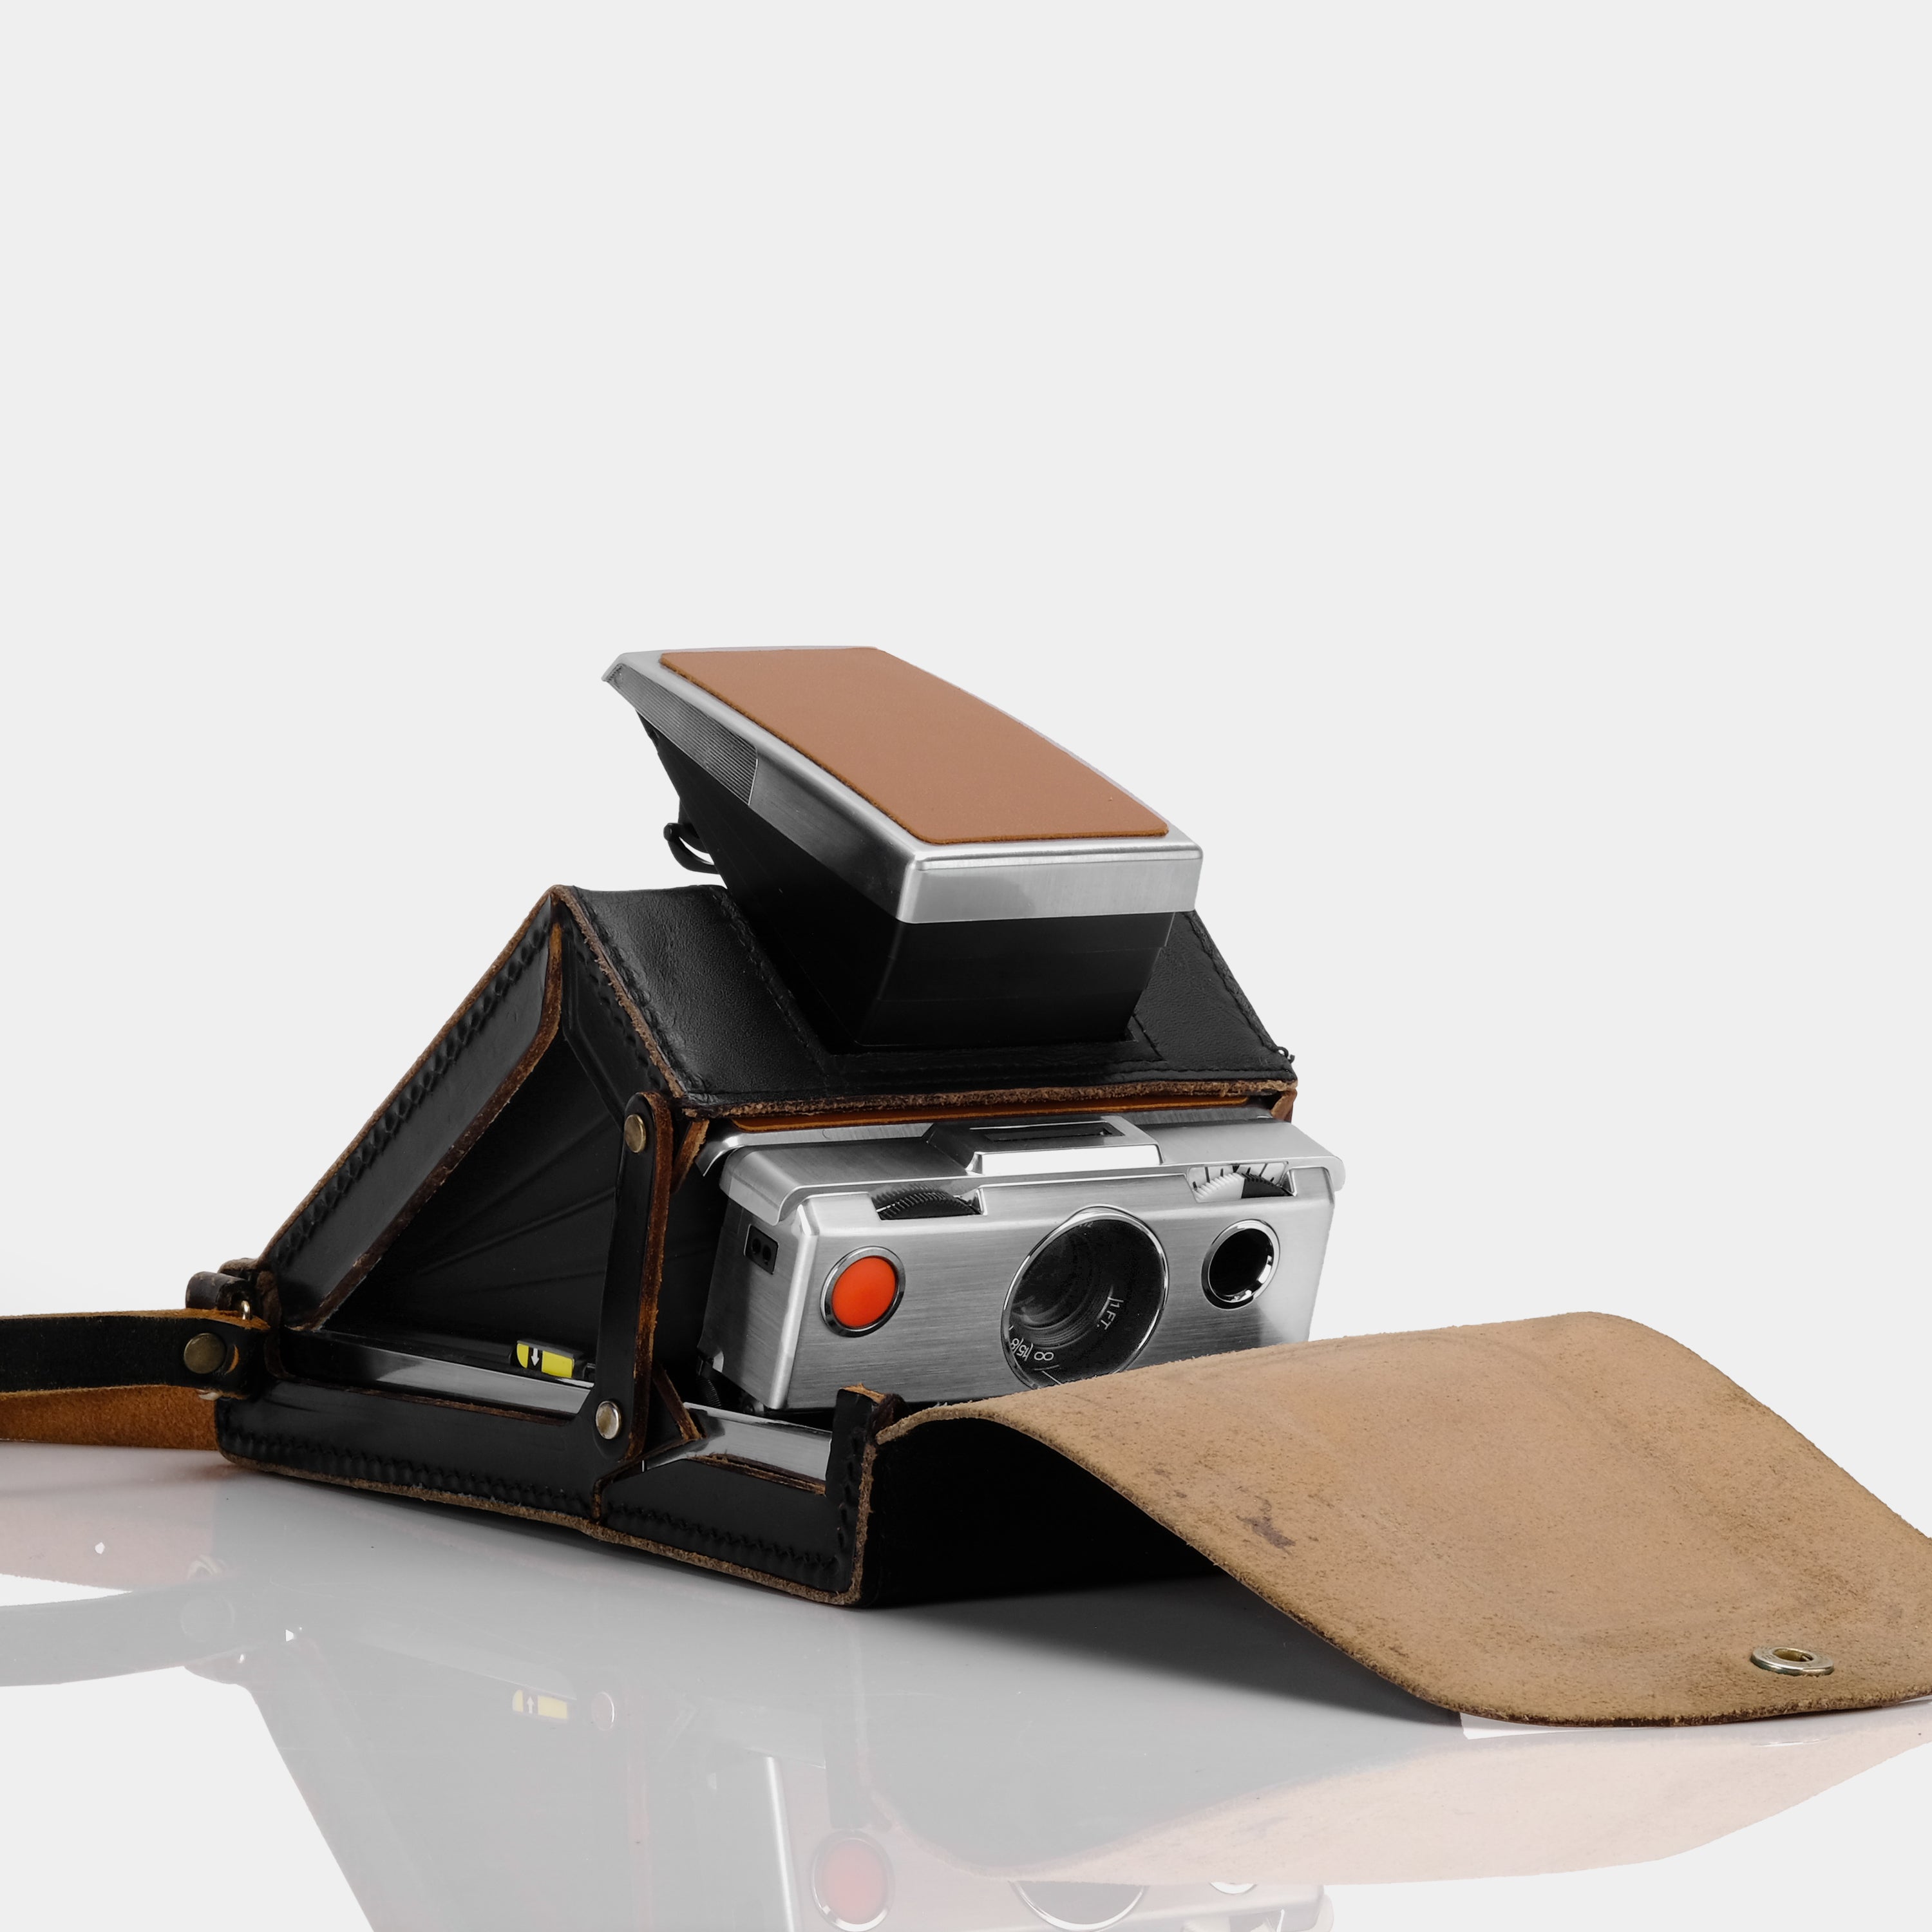 Polaroid SX-70 Black Leather Ever-Ready Style Folding Camera Case